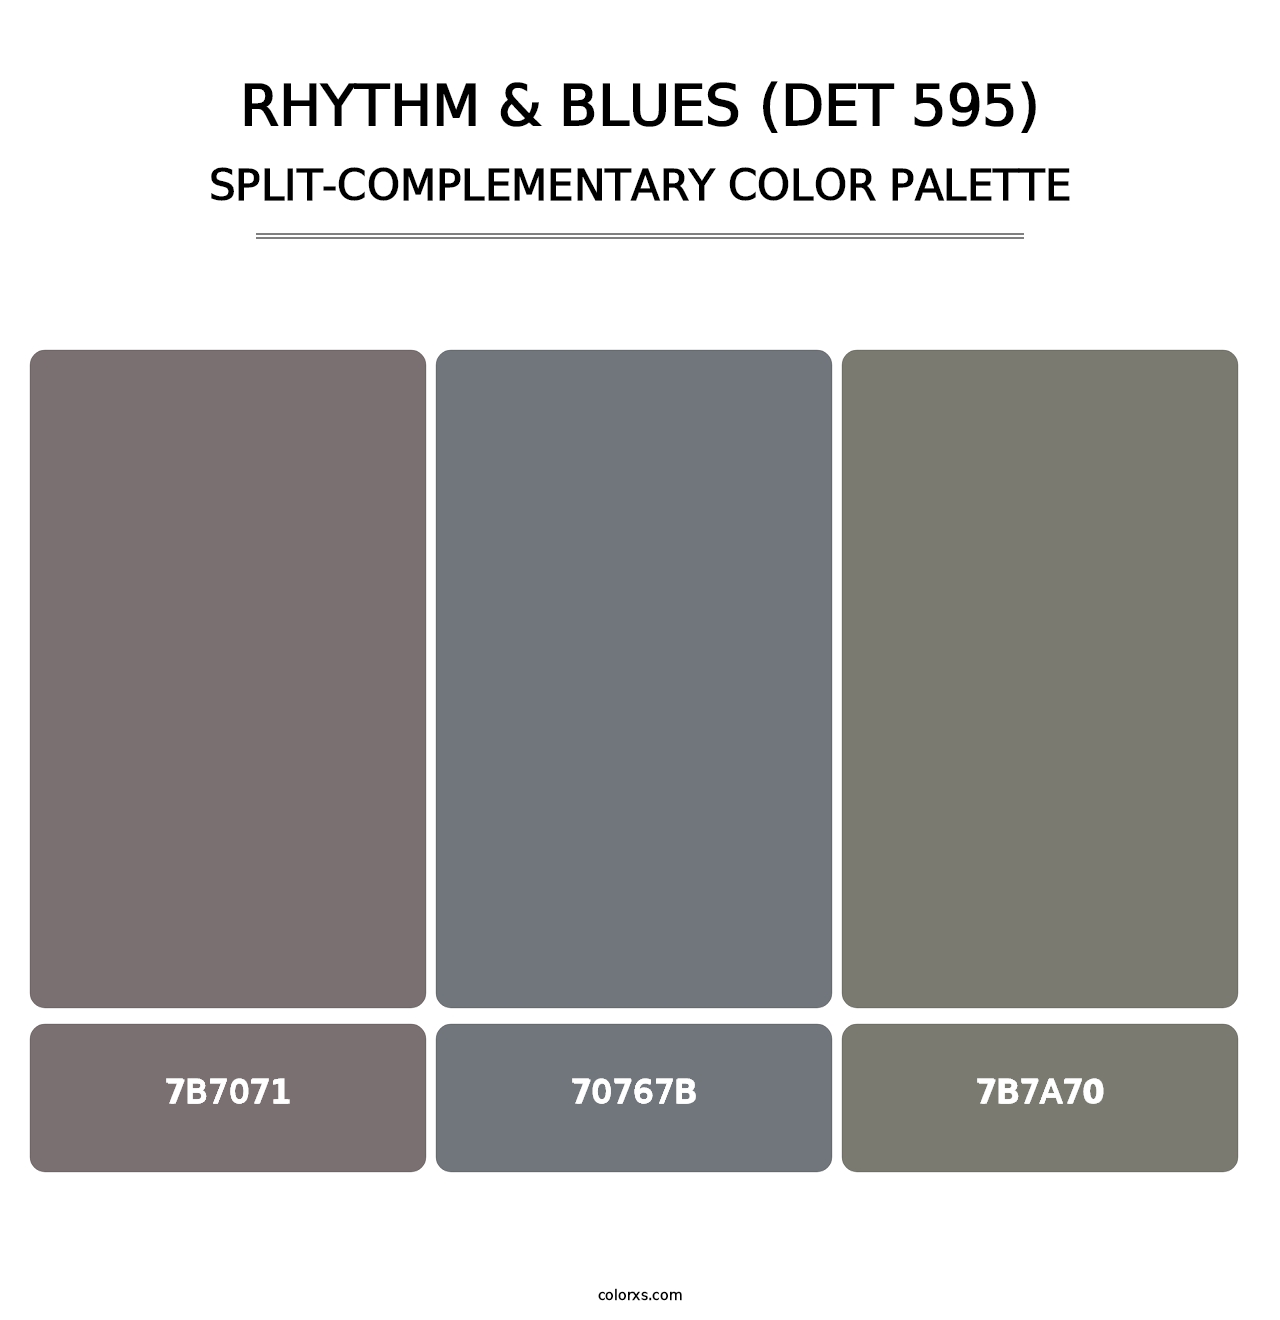 Rhythm & Blues (DET 595) - Split-Complementary Color Palette